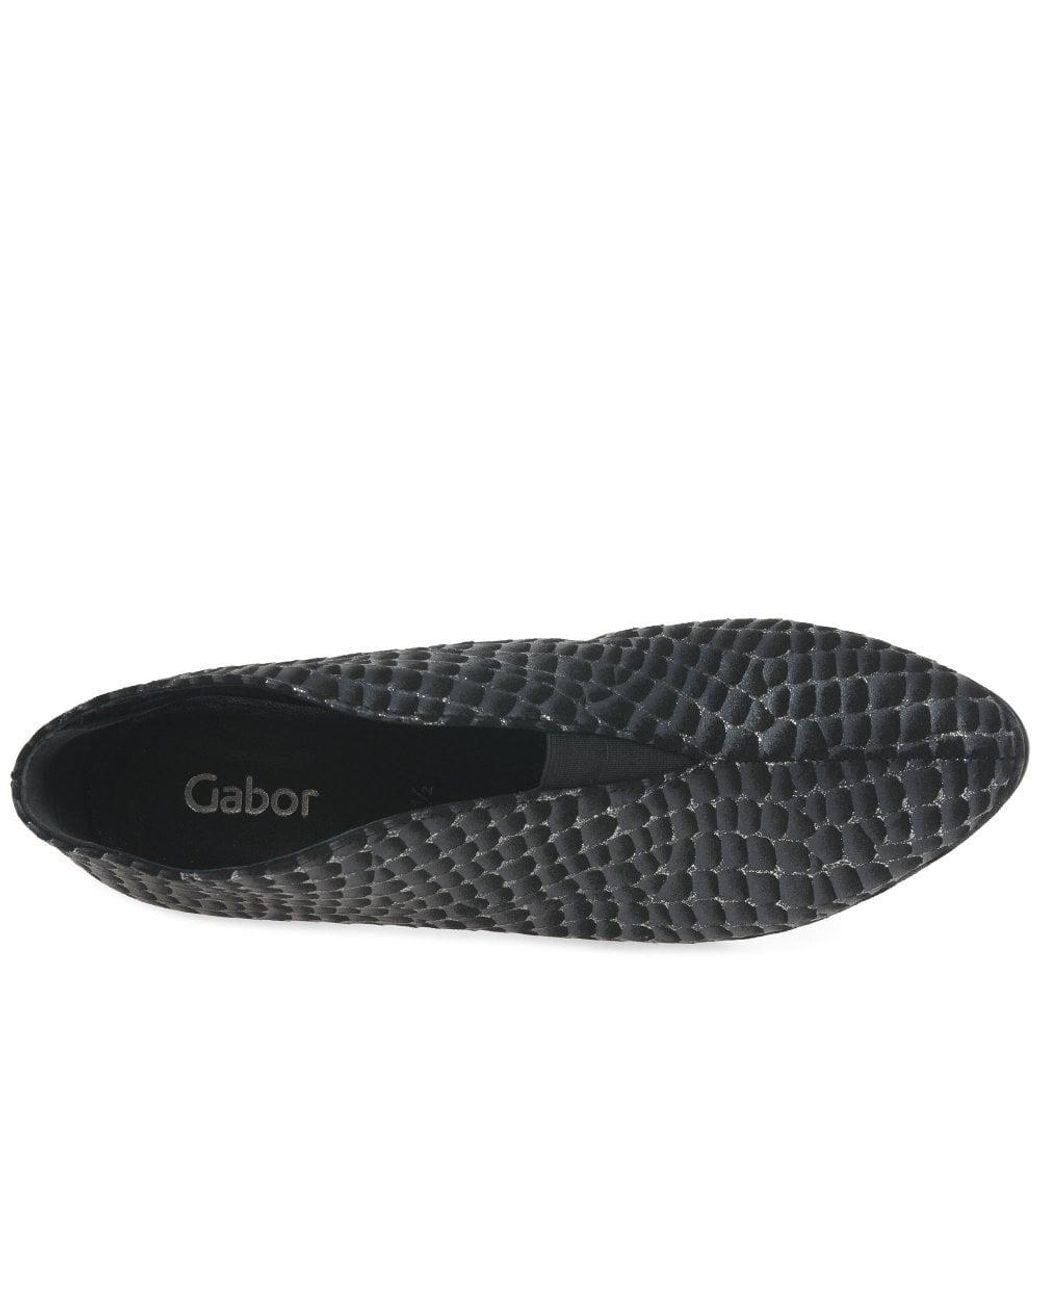 Gabor Suede Amien Womens Modern Slip On Ankle Boots in Black | Lyst  Australia